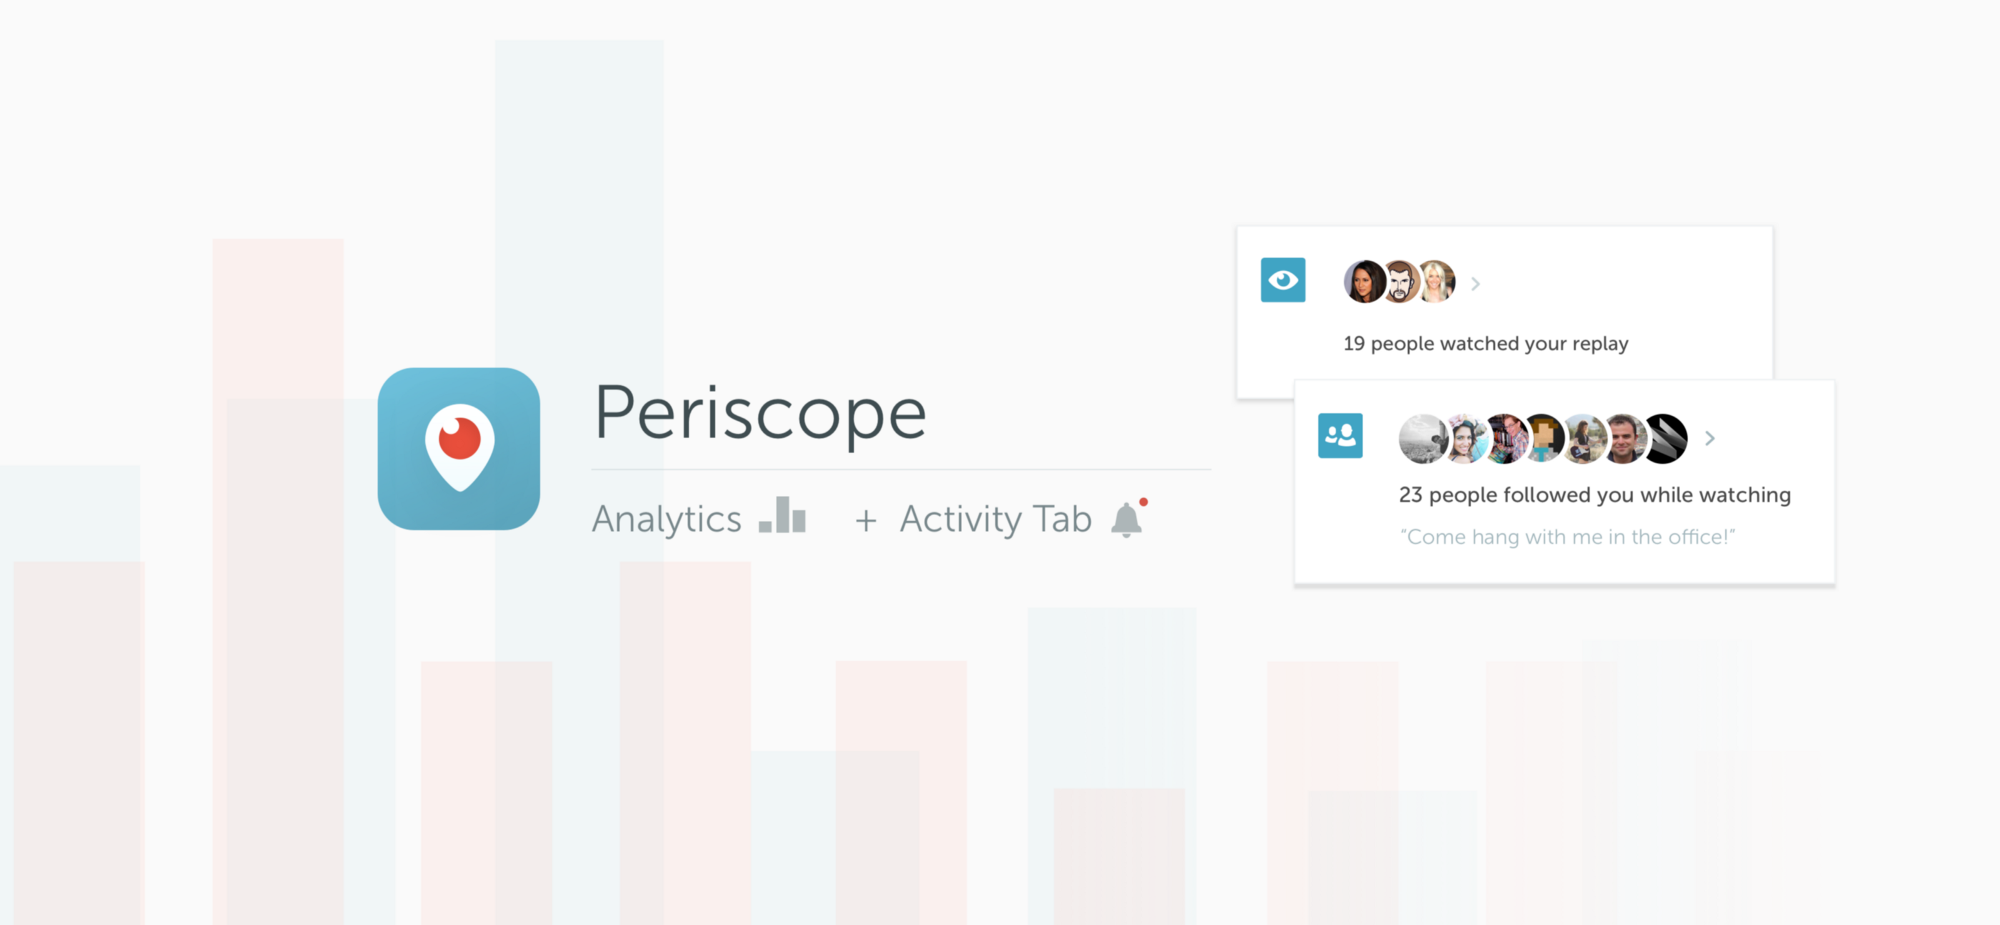 periscope,periscope activity tab,periscope aktivite sekmesi,periscope analy...